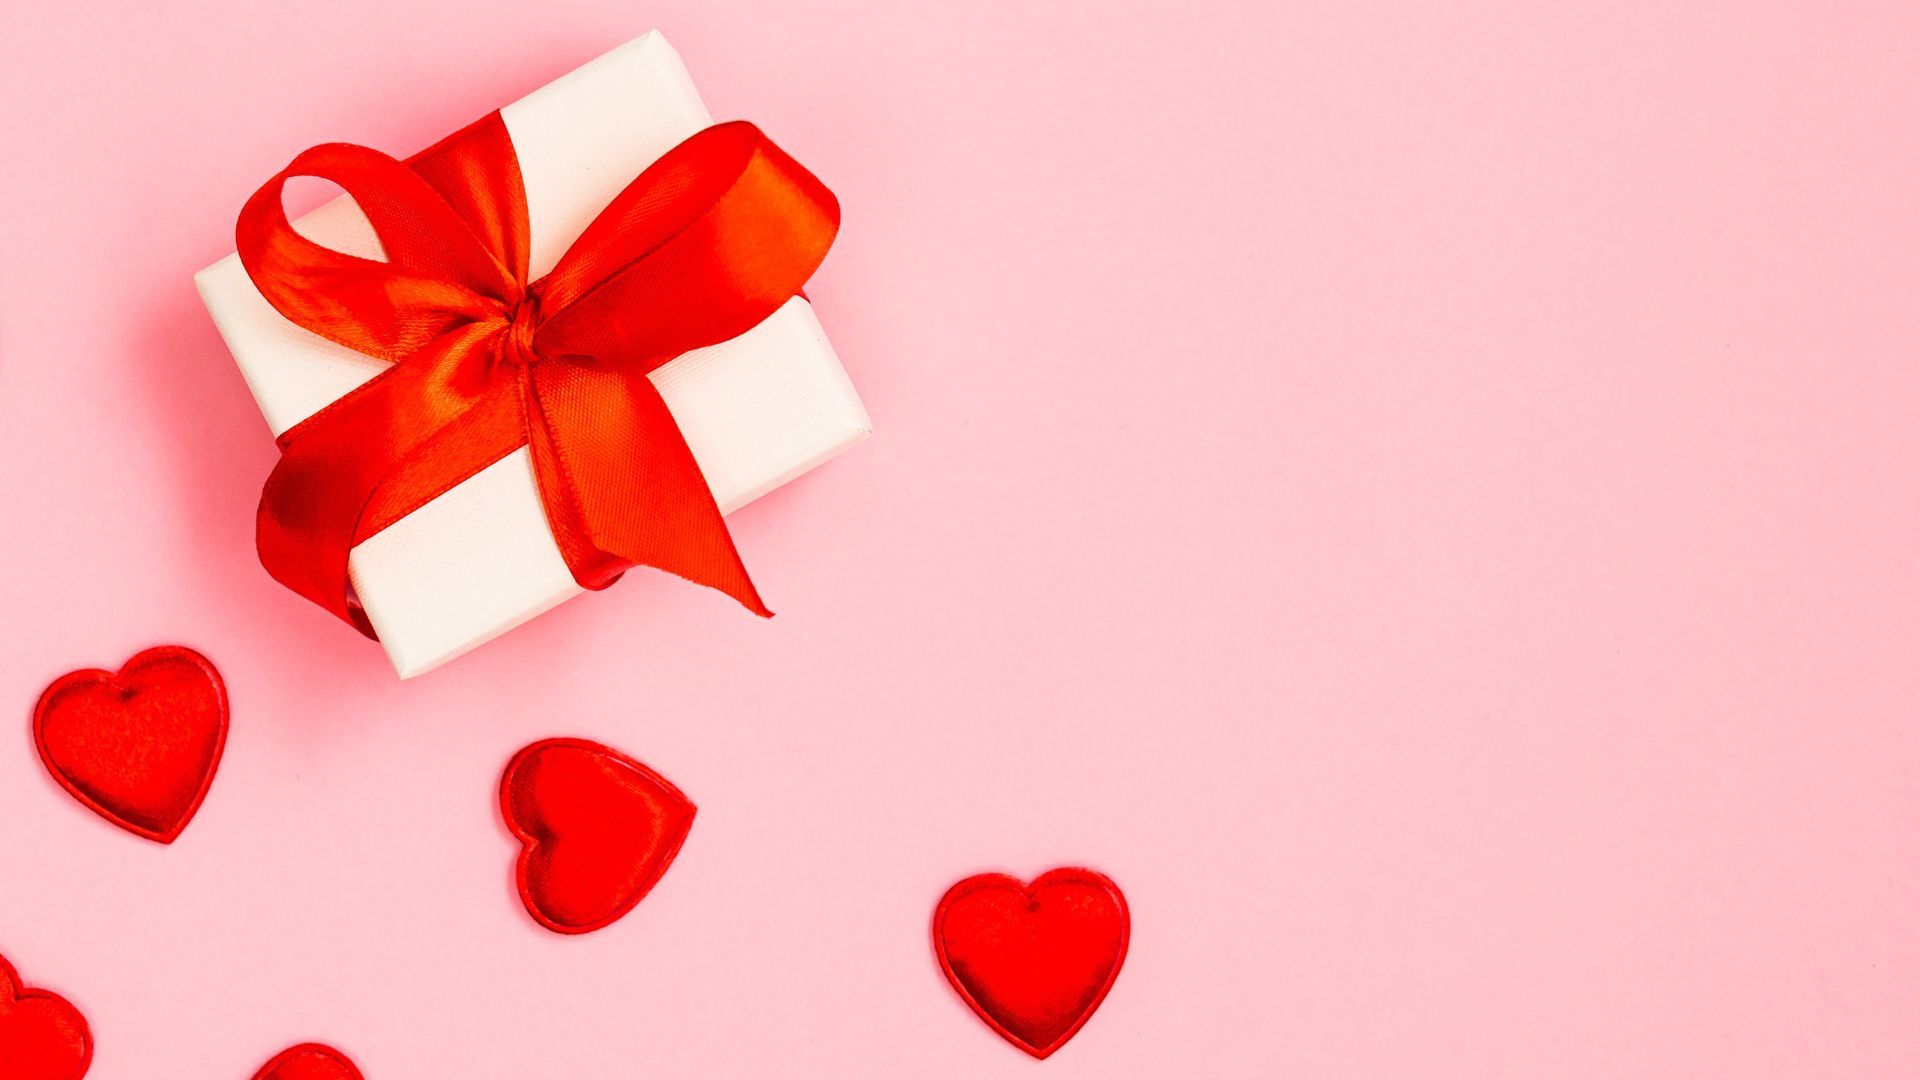 44 Best Gifts For Girlfriends 2023 - Unique Girlfriend Gift Ideas